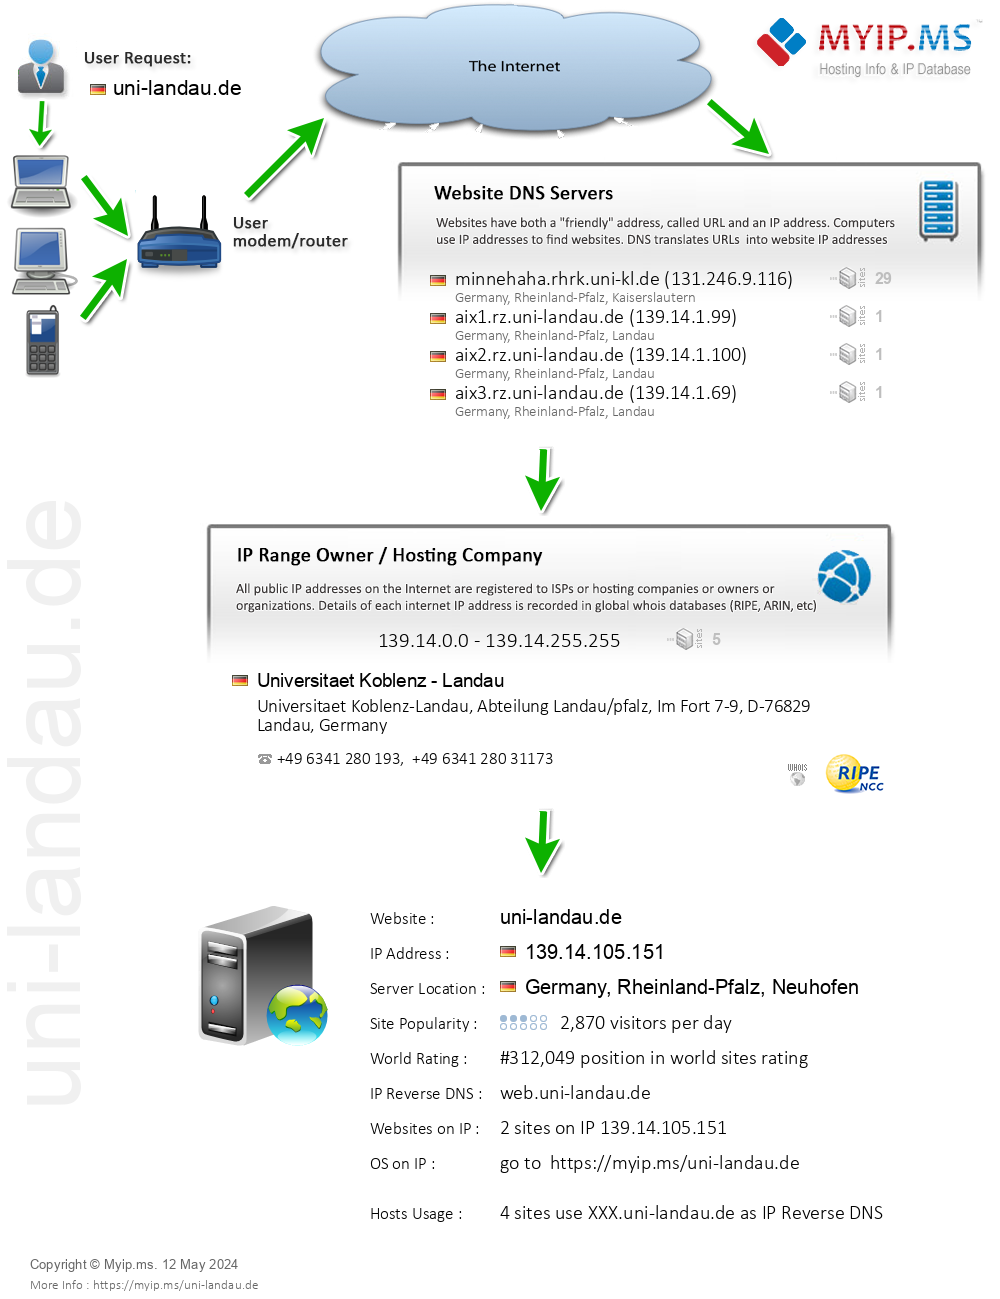 Uni-landau.de - Website Hosting Visual IP Diagram